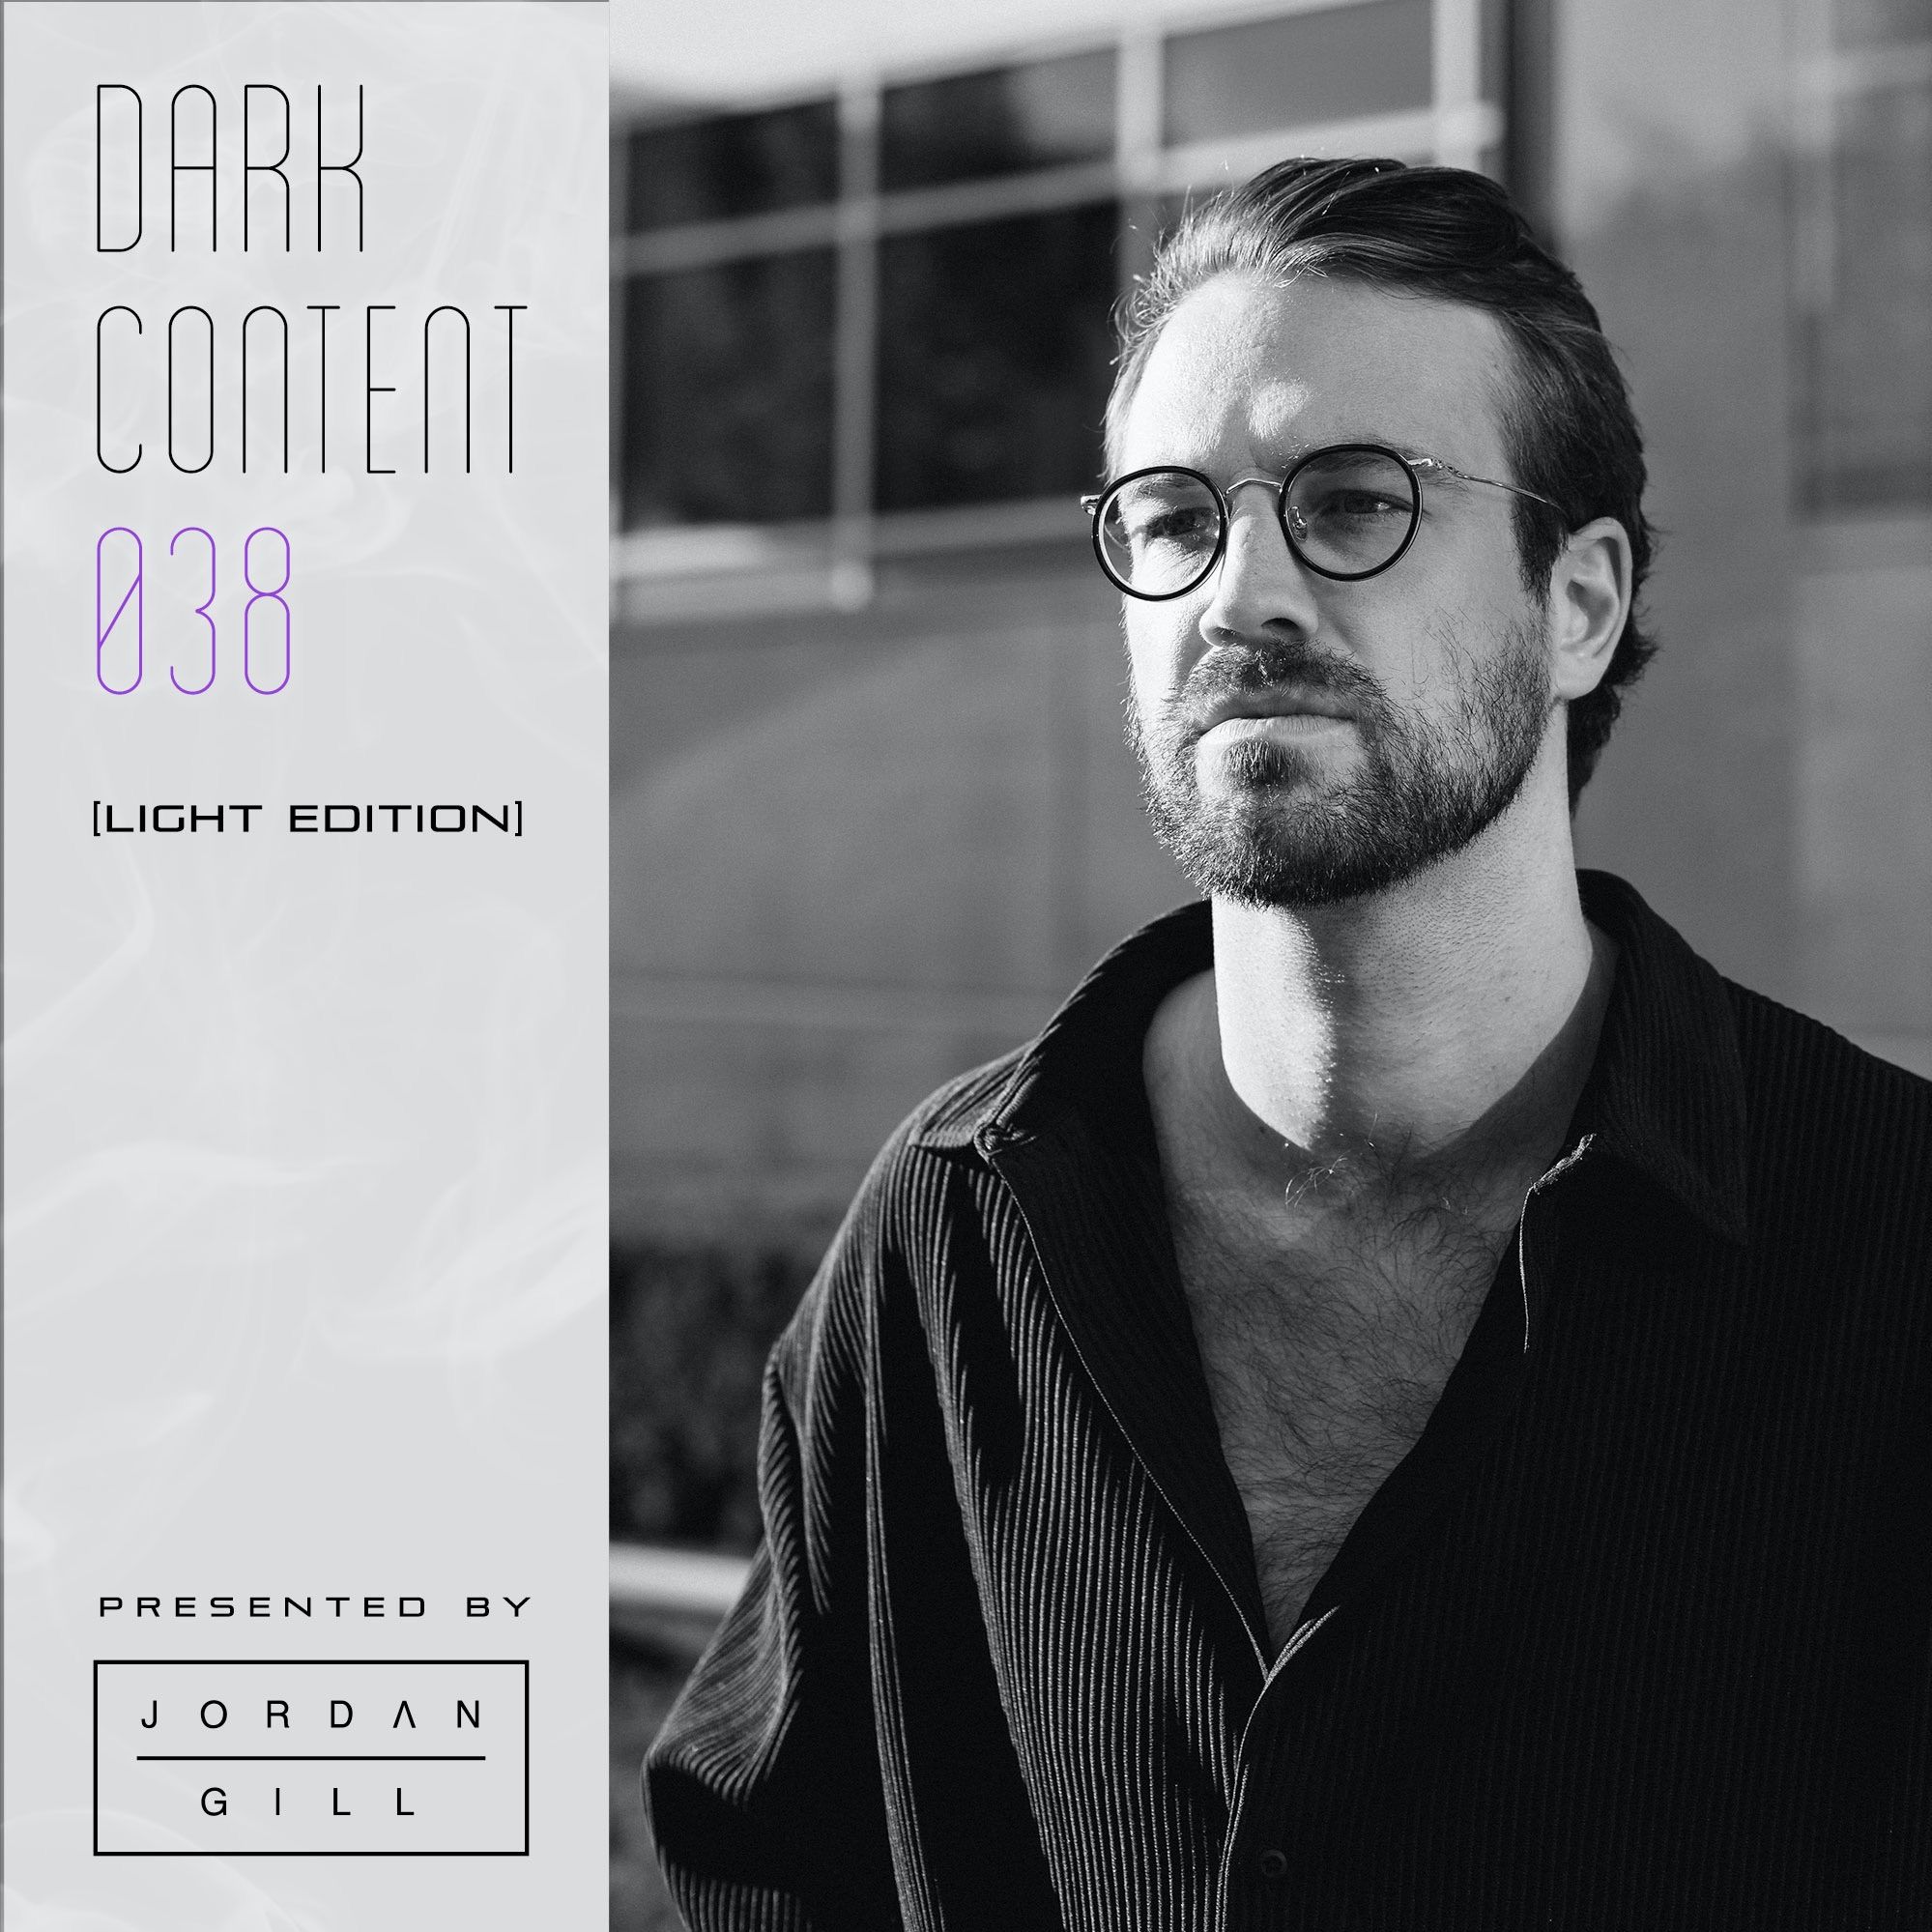 බාගත Dark Content 038 [Light Edition]